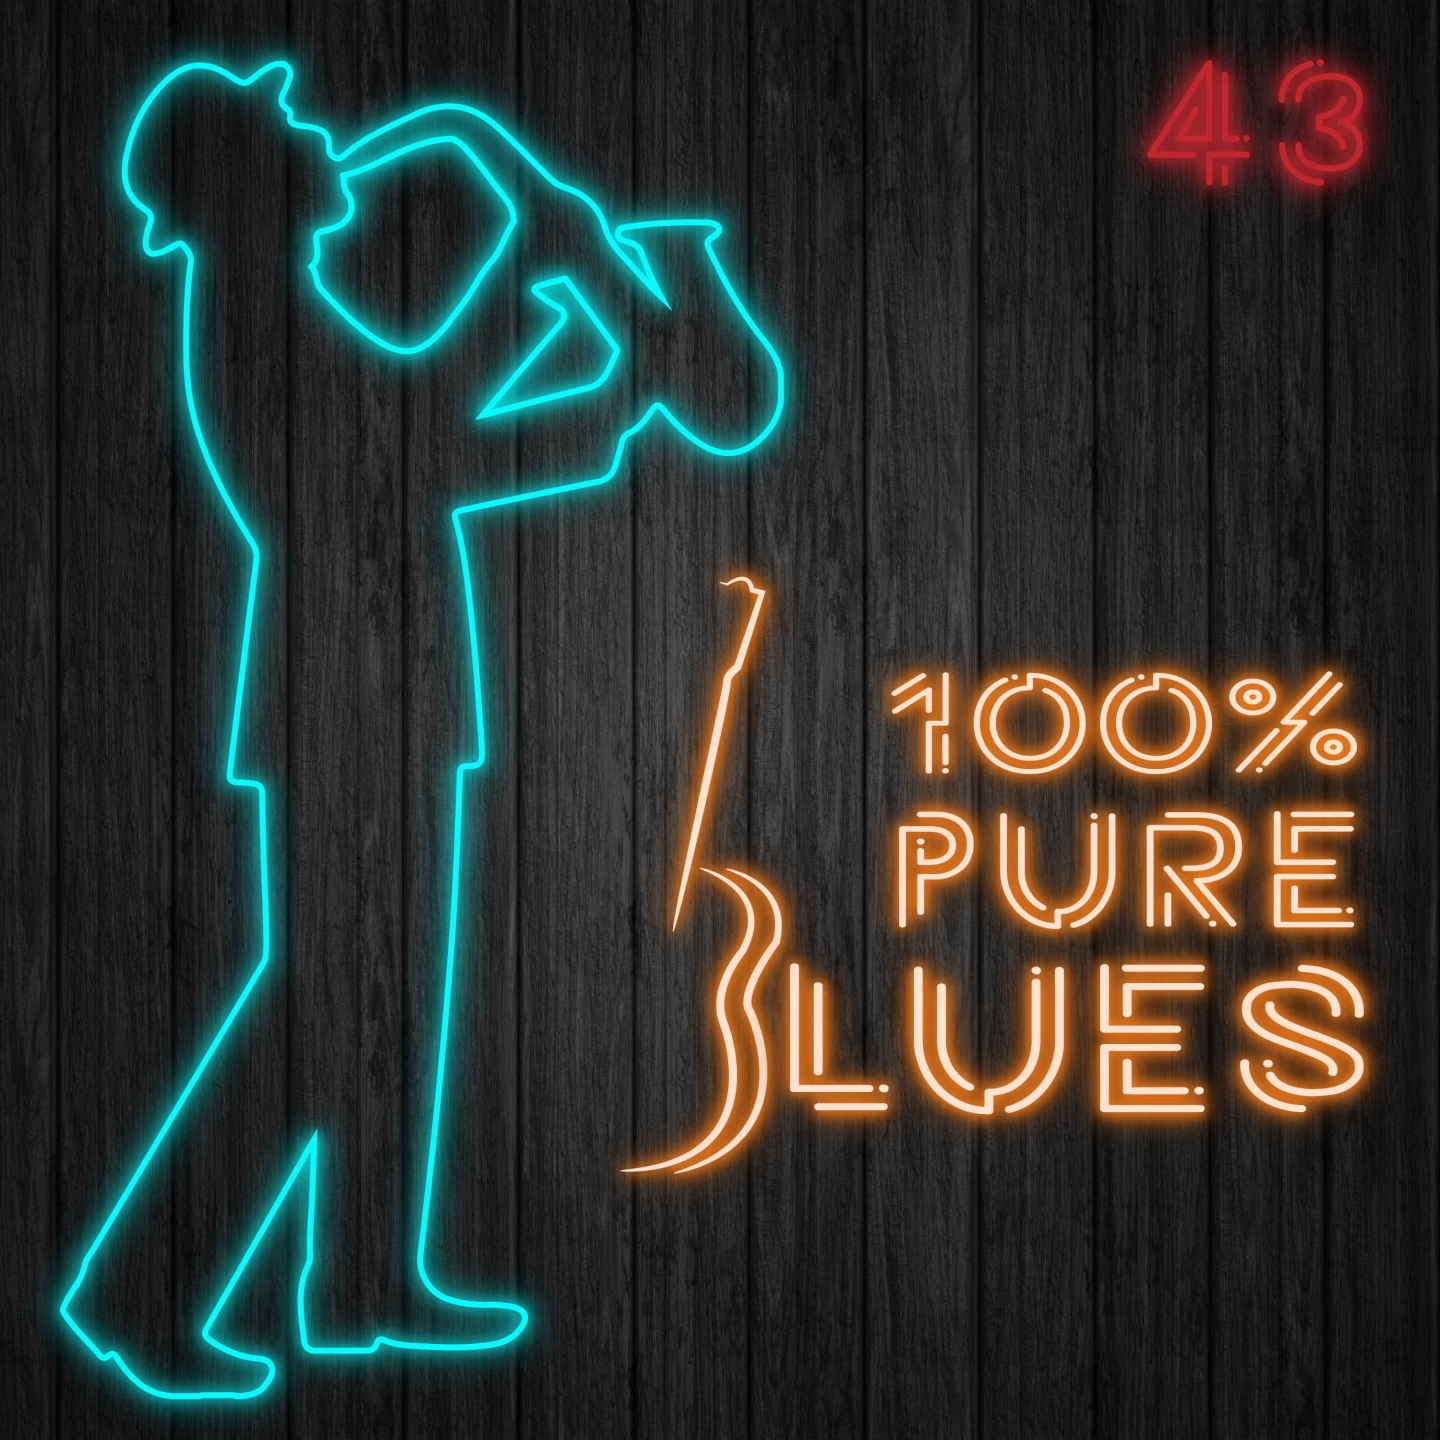 100% Pure Blues / 43